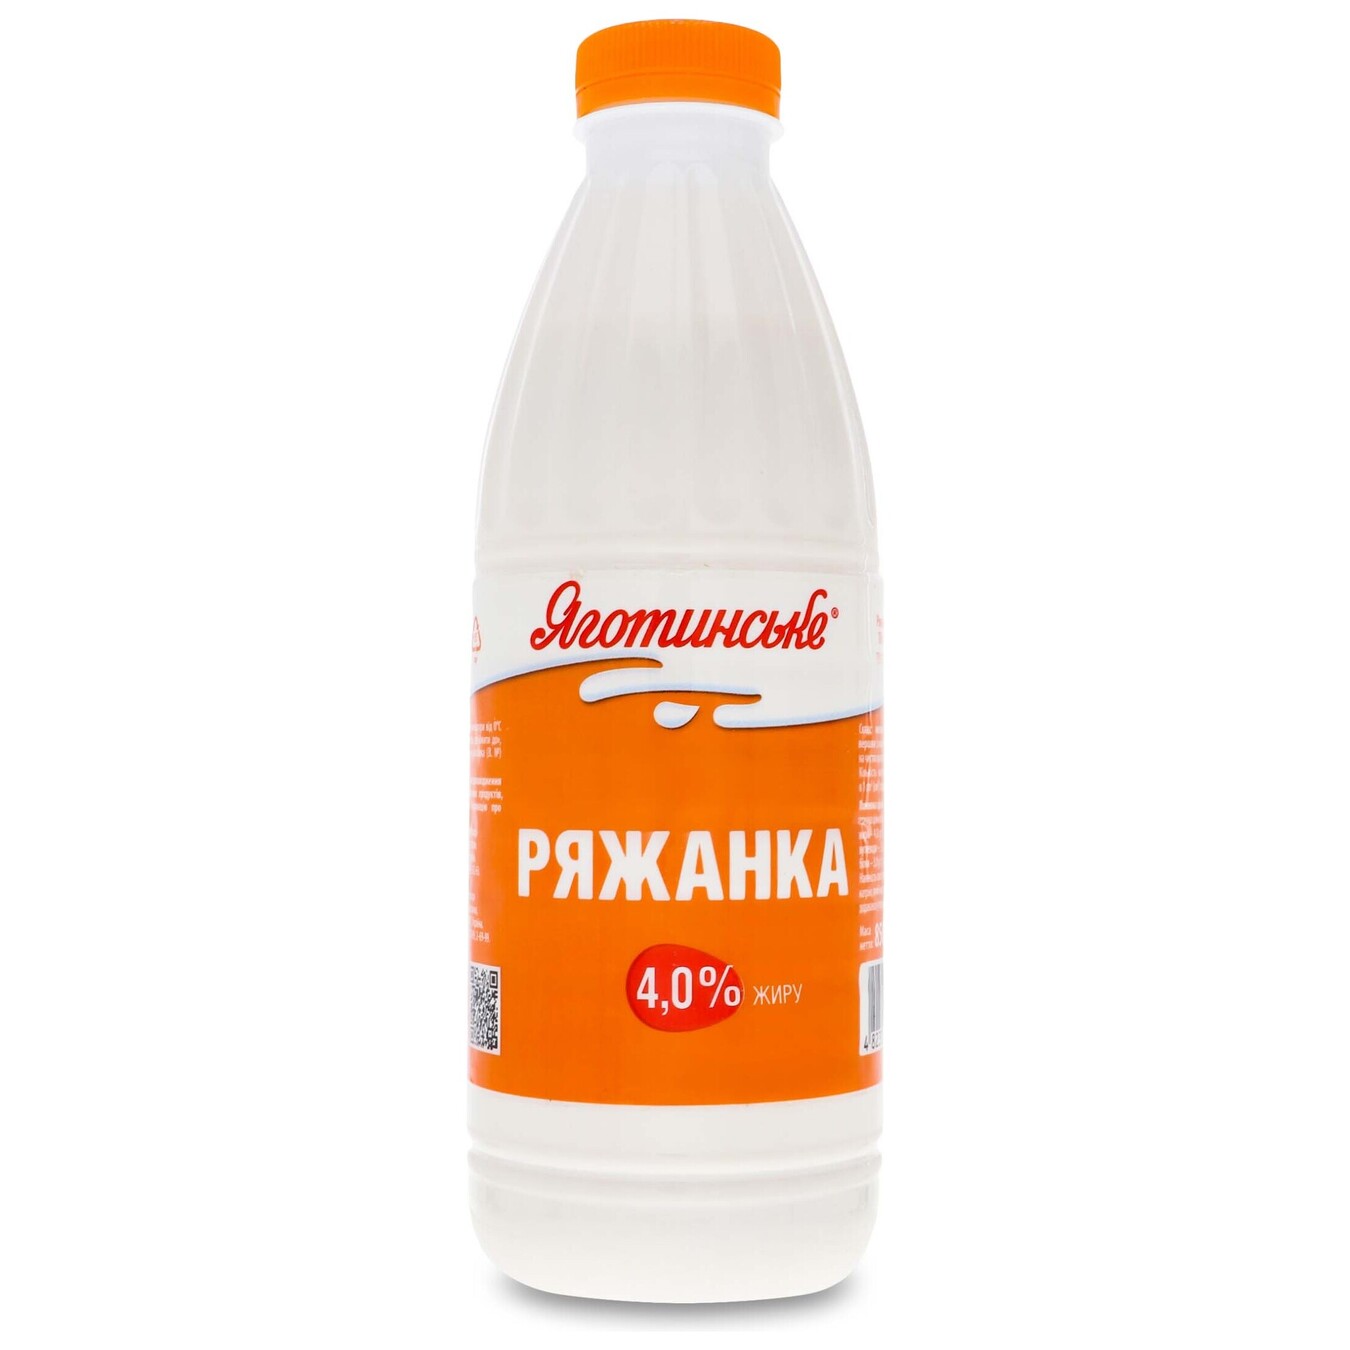 Yagotinska Ryazhanka 4% 850g